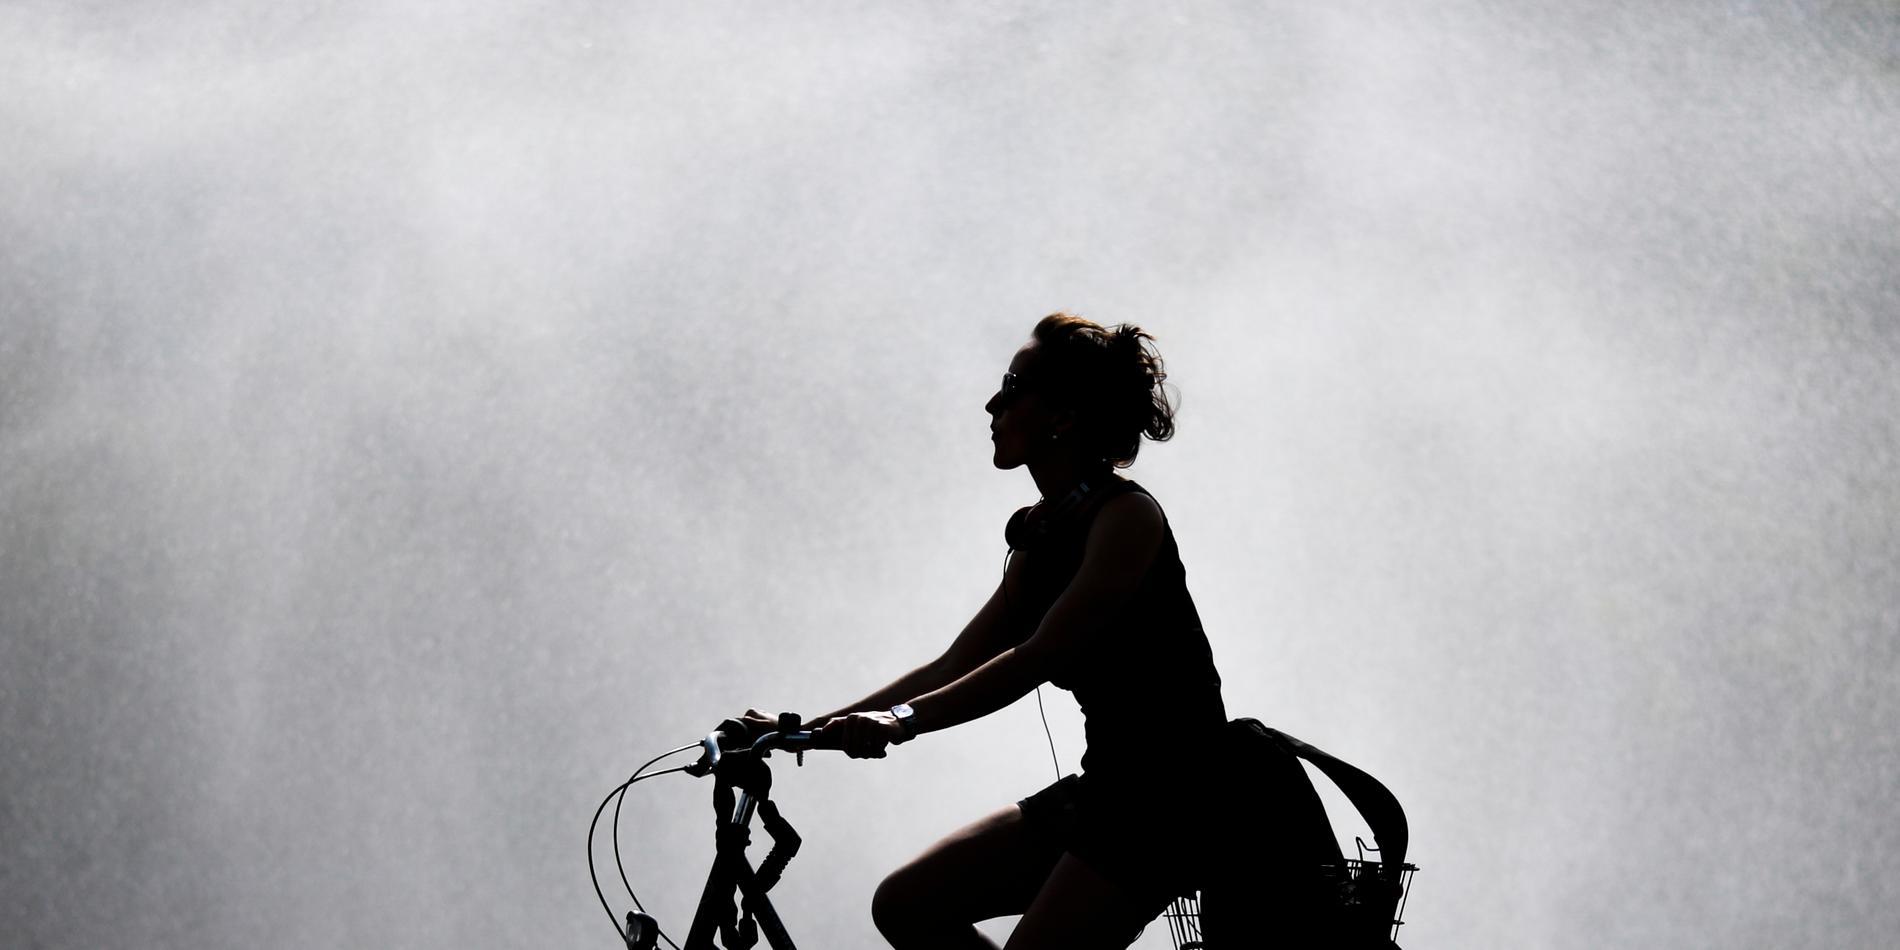 Cyklingen i Stockholm har ökat med 85 procent på 15 år.